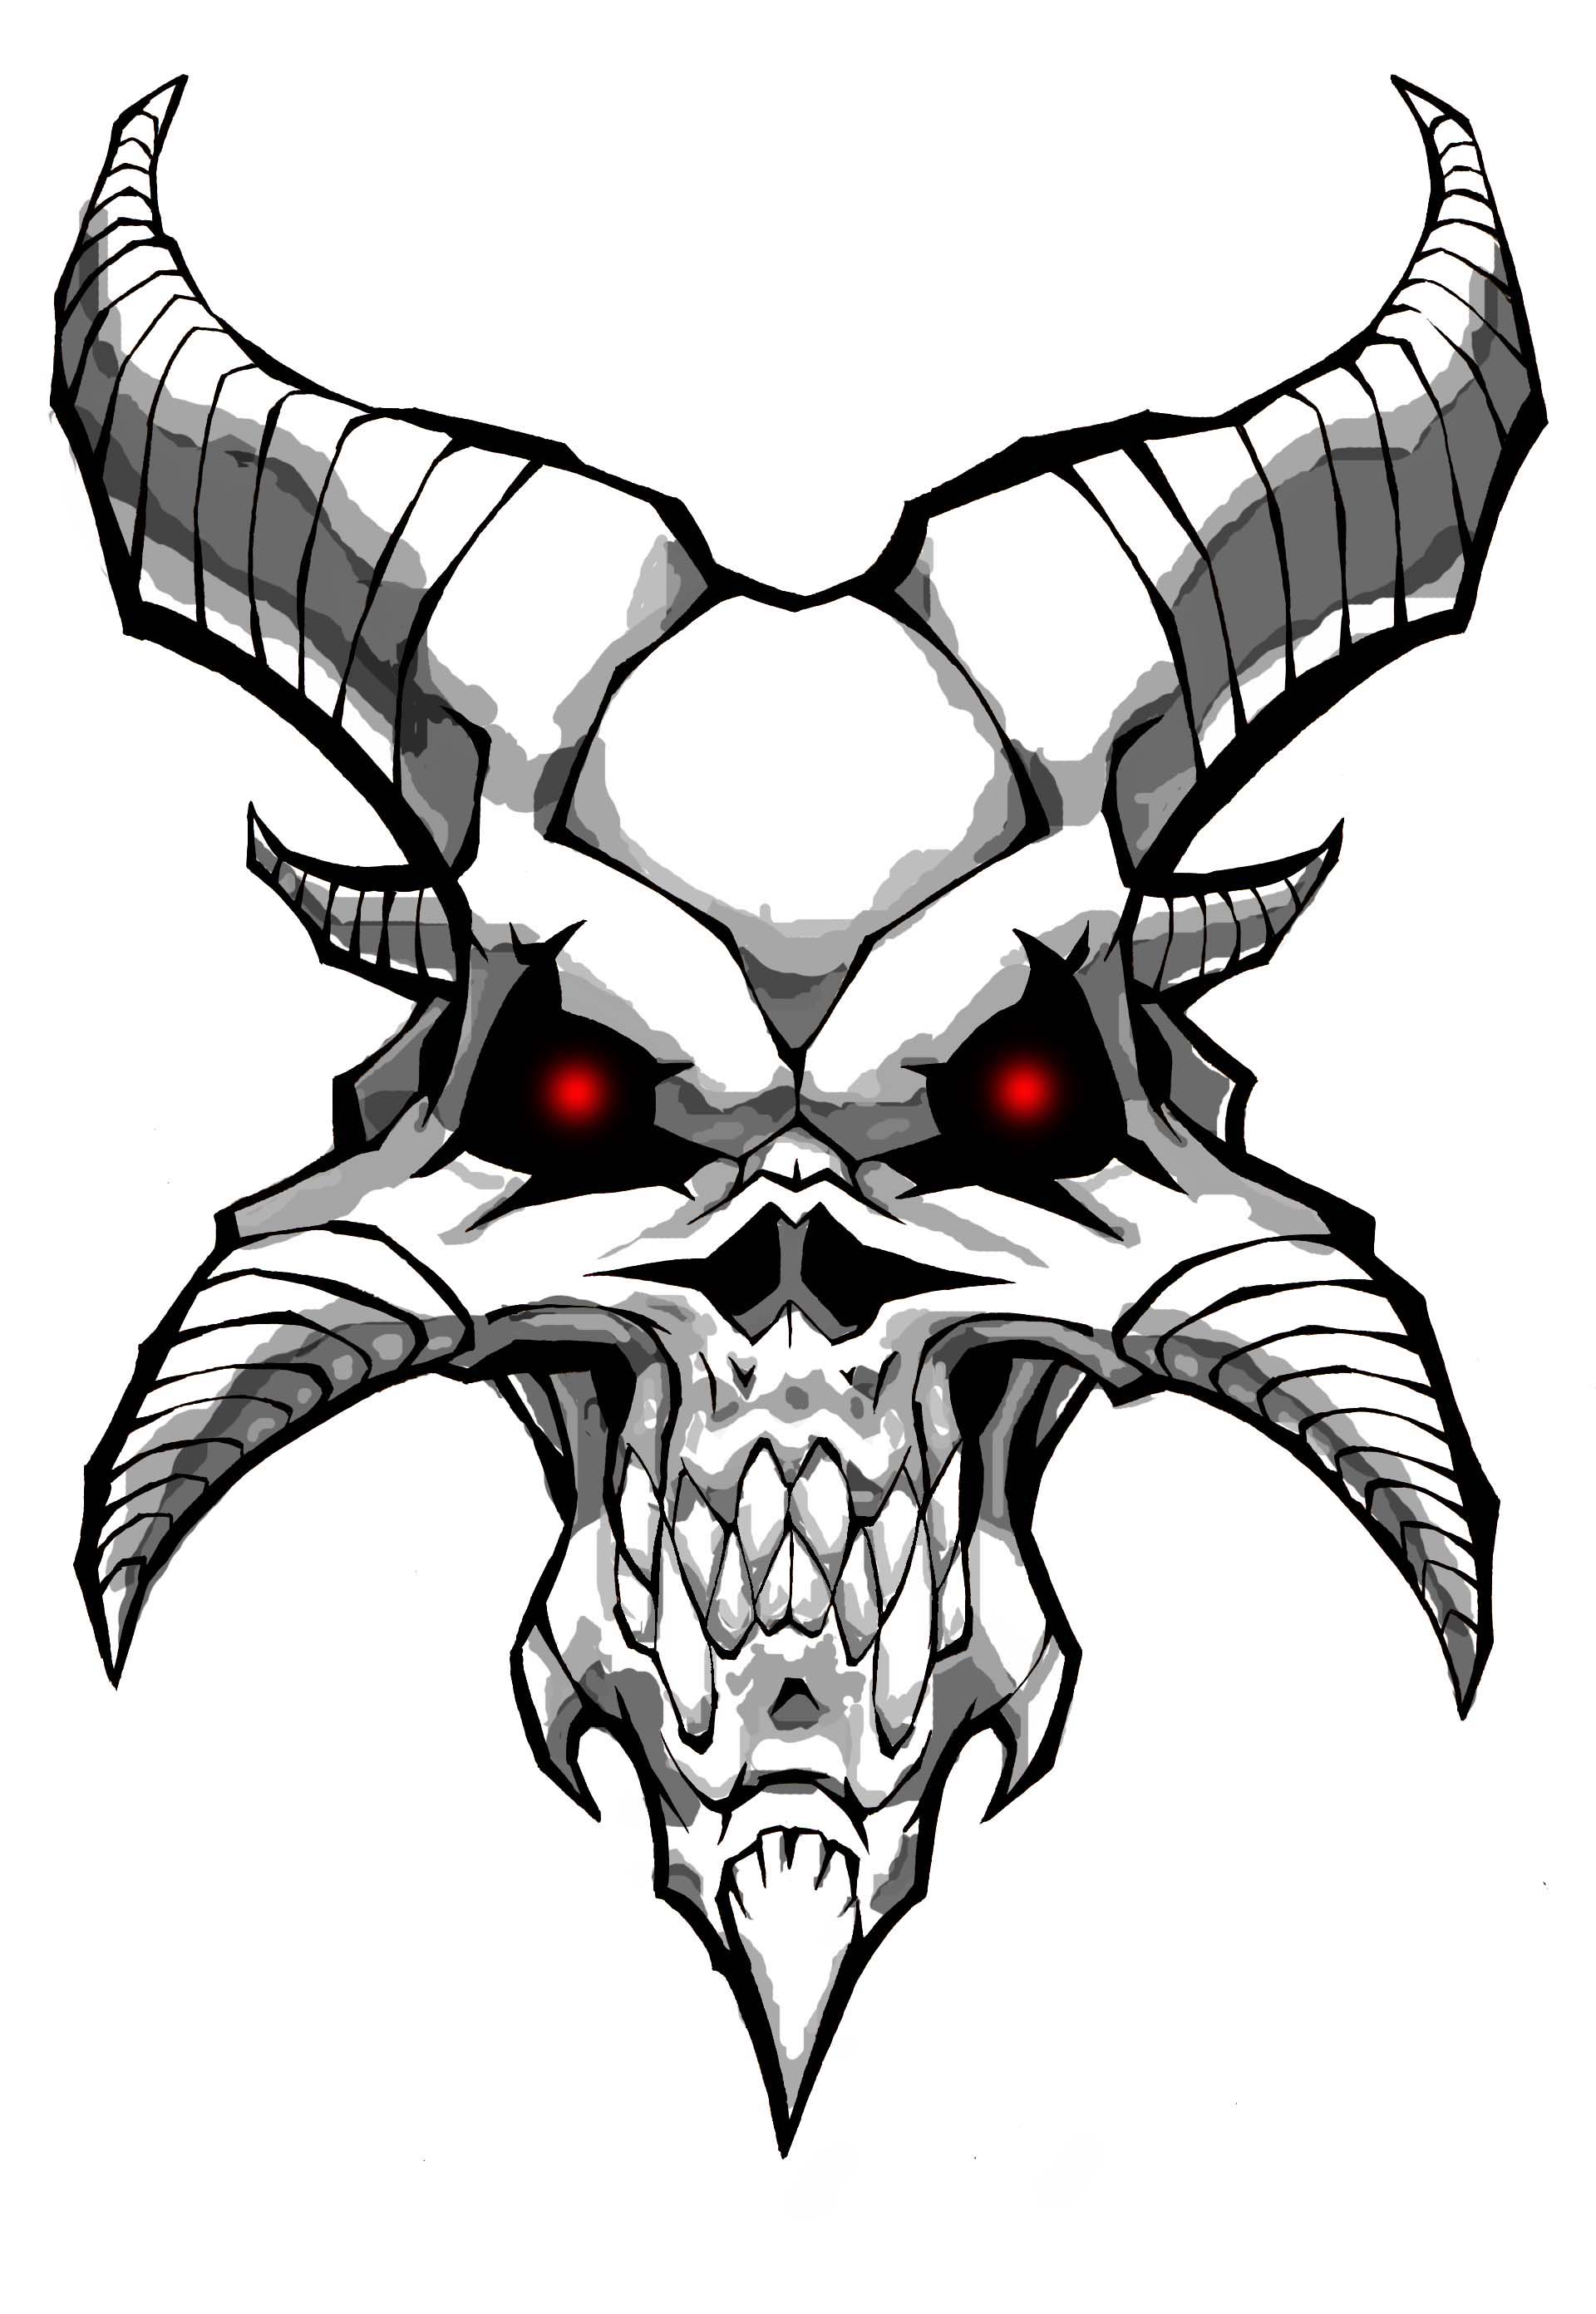 Demon Skull by DeathsProdigy on deviantART